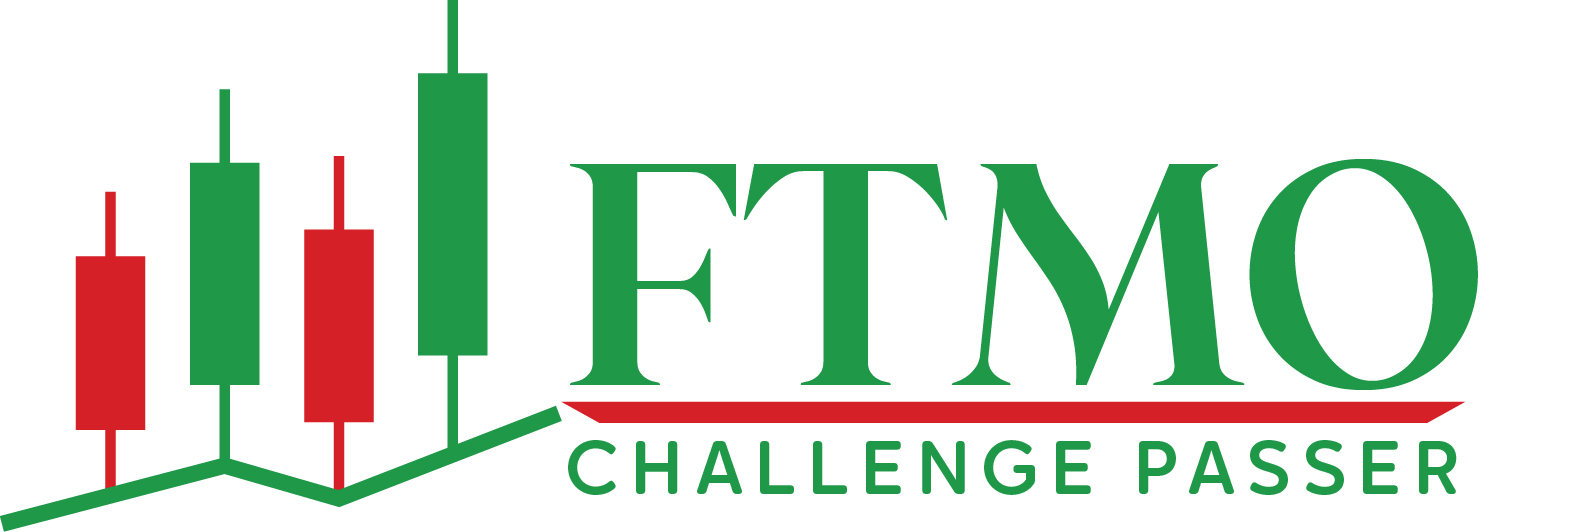 FTMO || CHALLENGE PASSER-We Pass Your Challenge